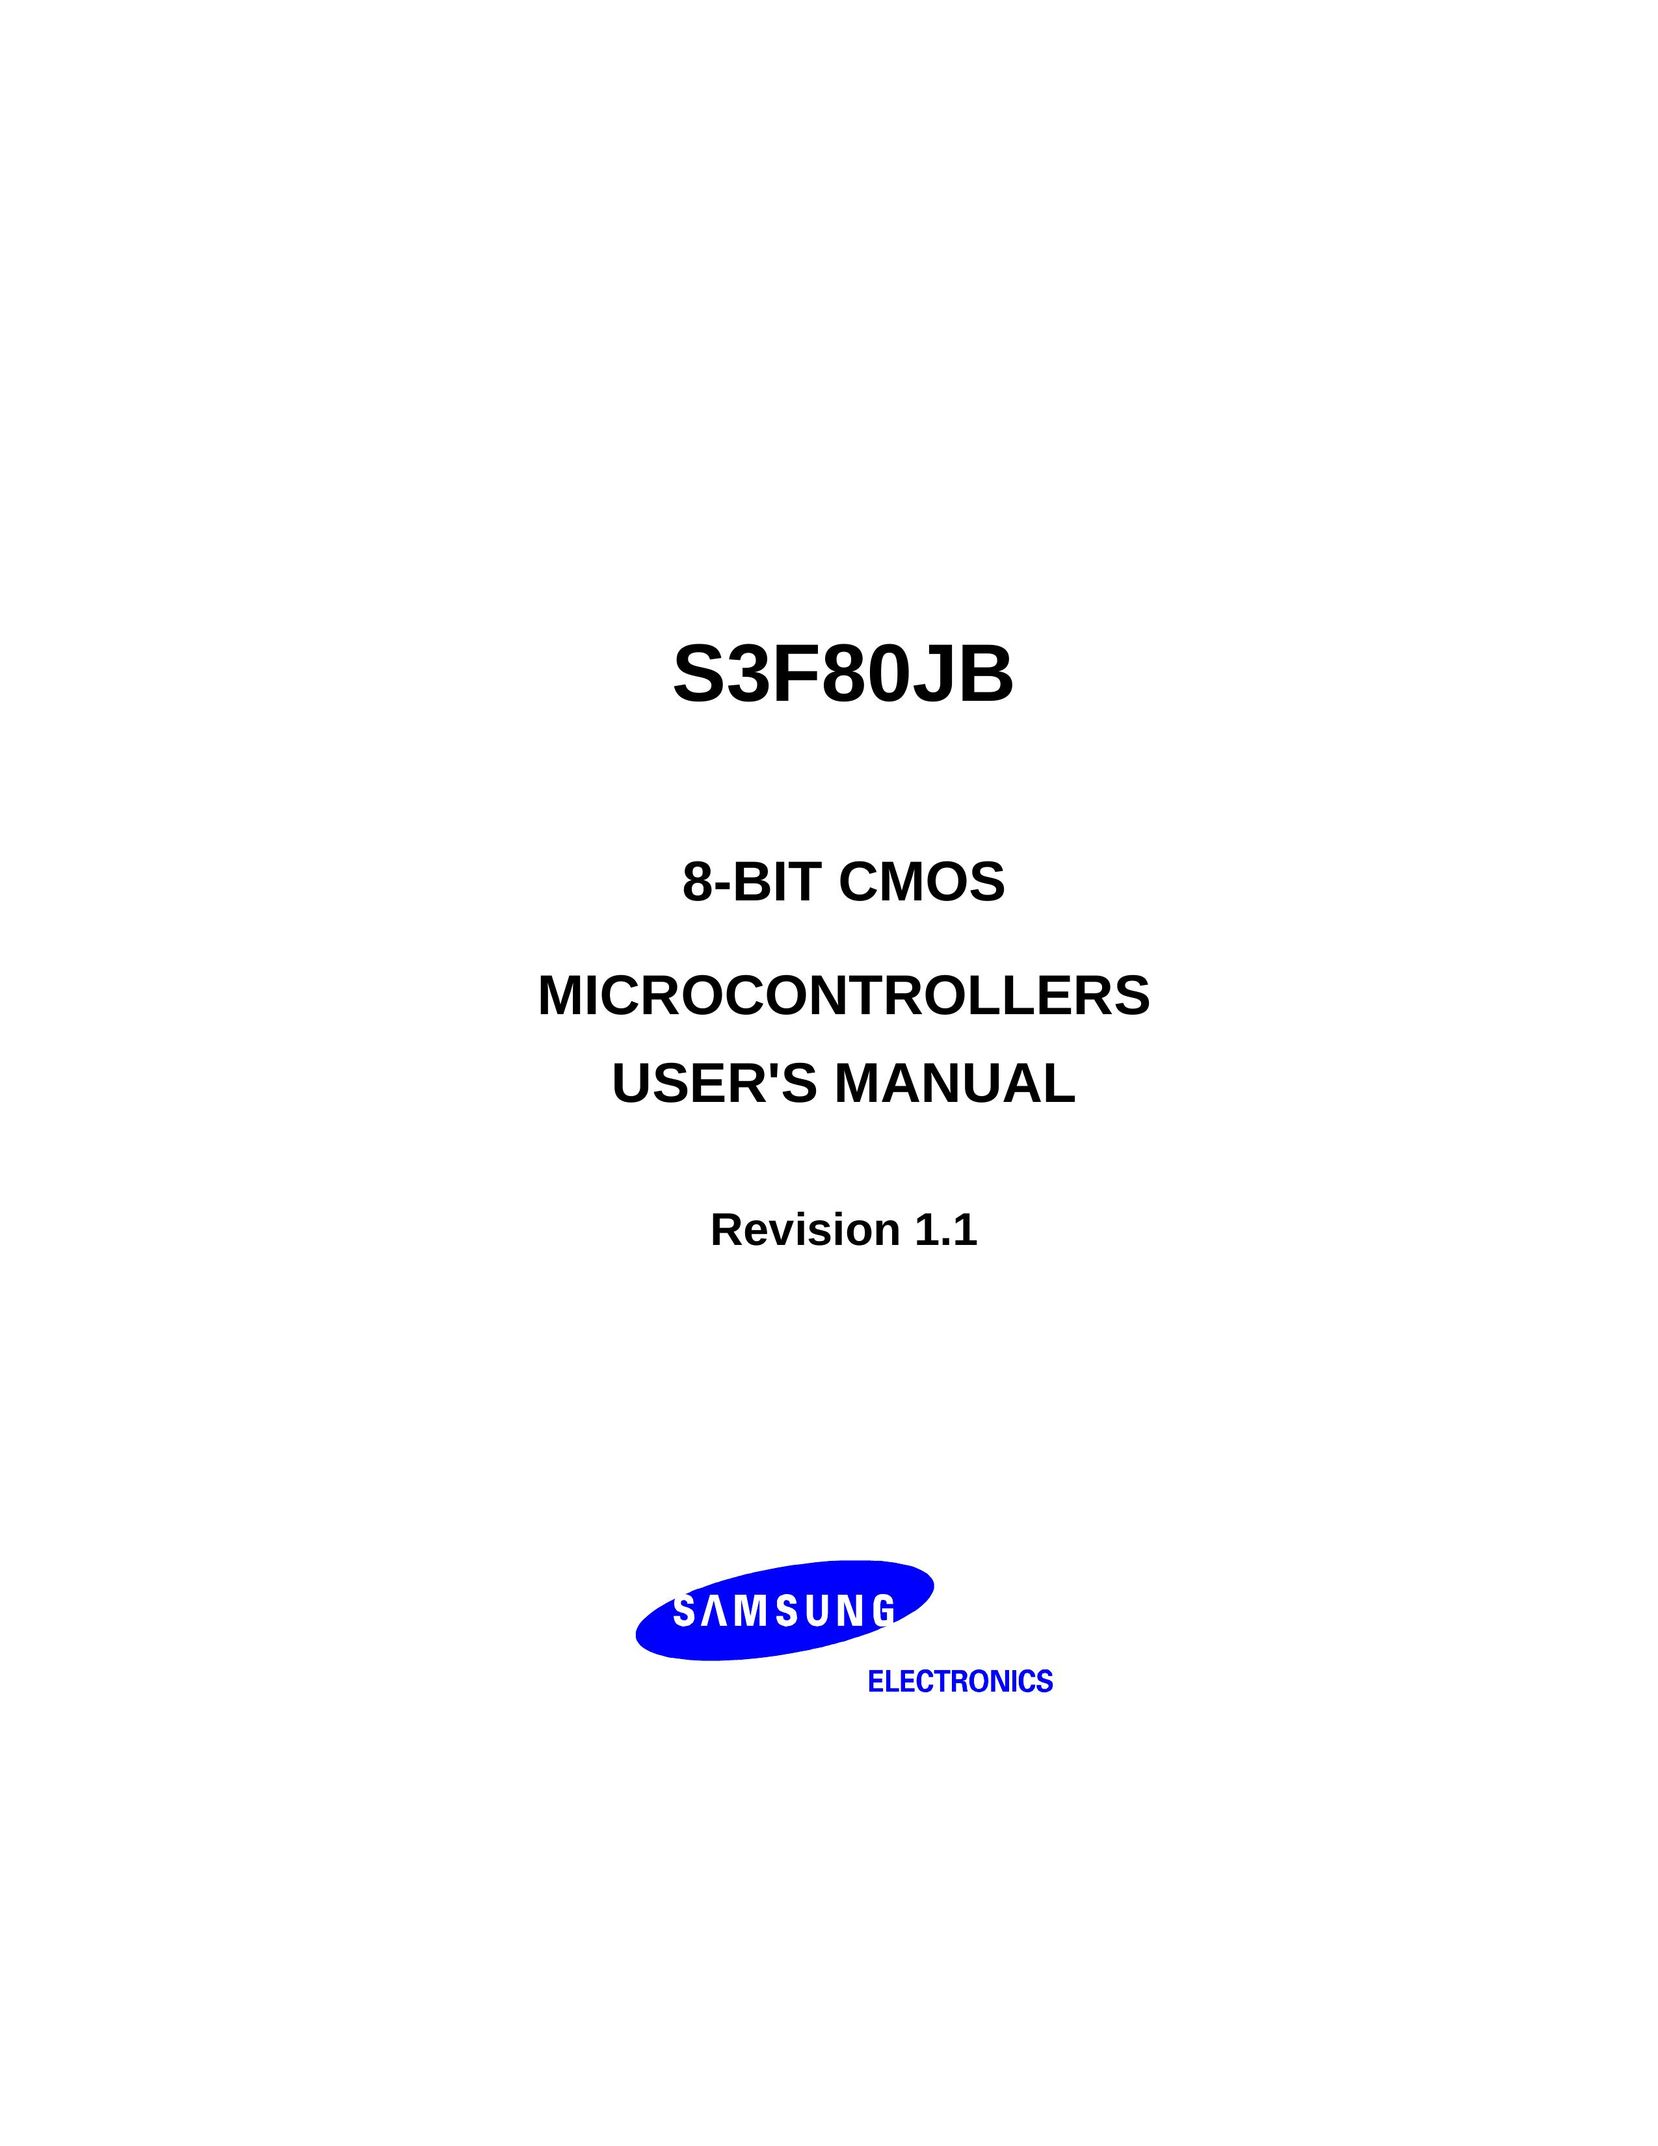 Samsung S3F80JB Universal Remote User Manual